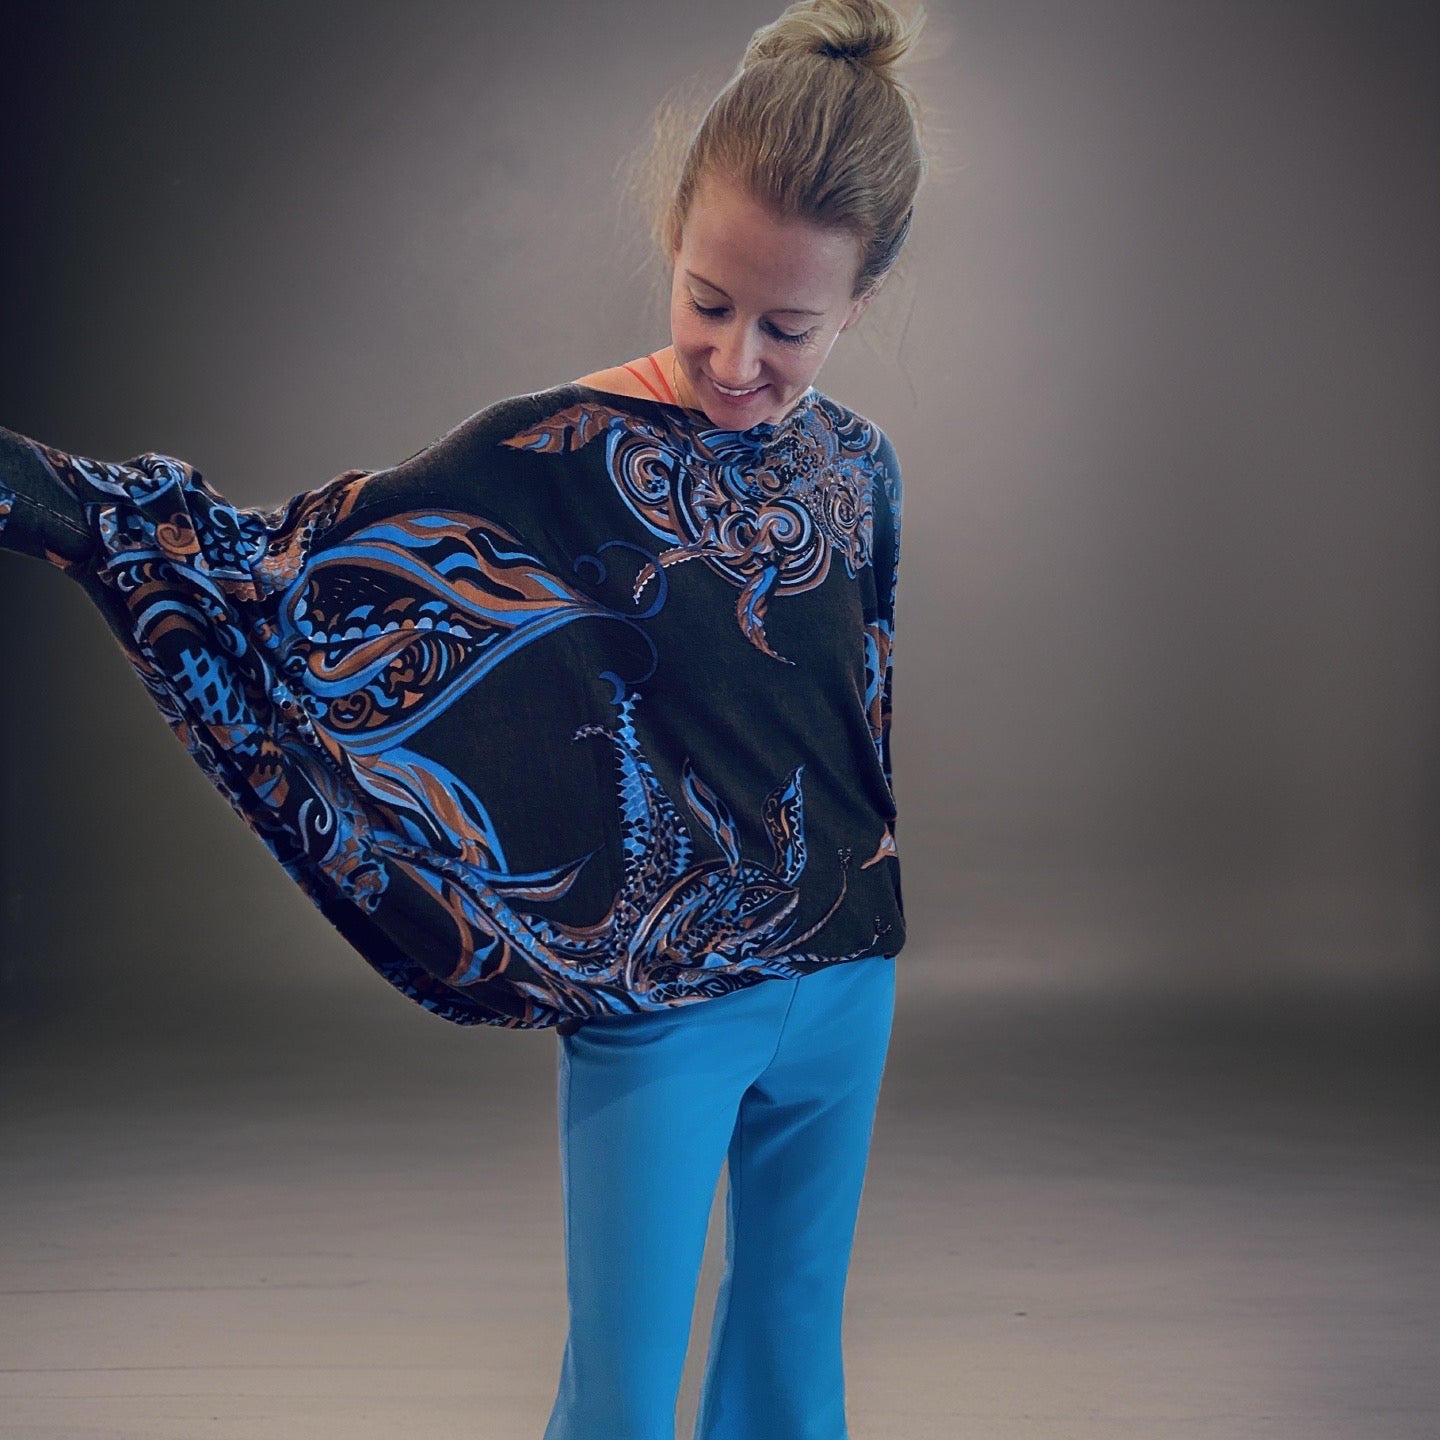 SOUL LEAVES Baby-Kaschmir Feinstrick Pullover mit Fledermaus-Ärmeln, braun & blau, limitiert # 3